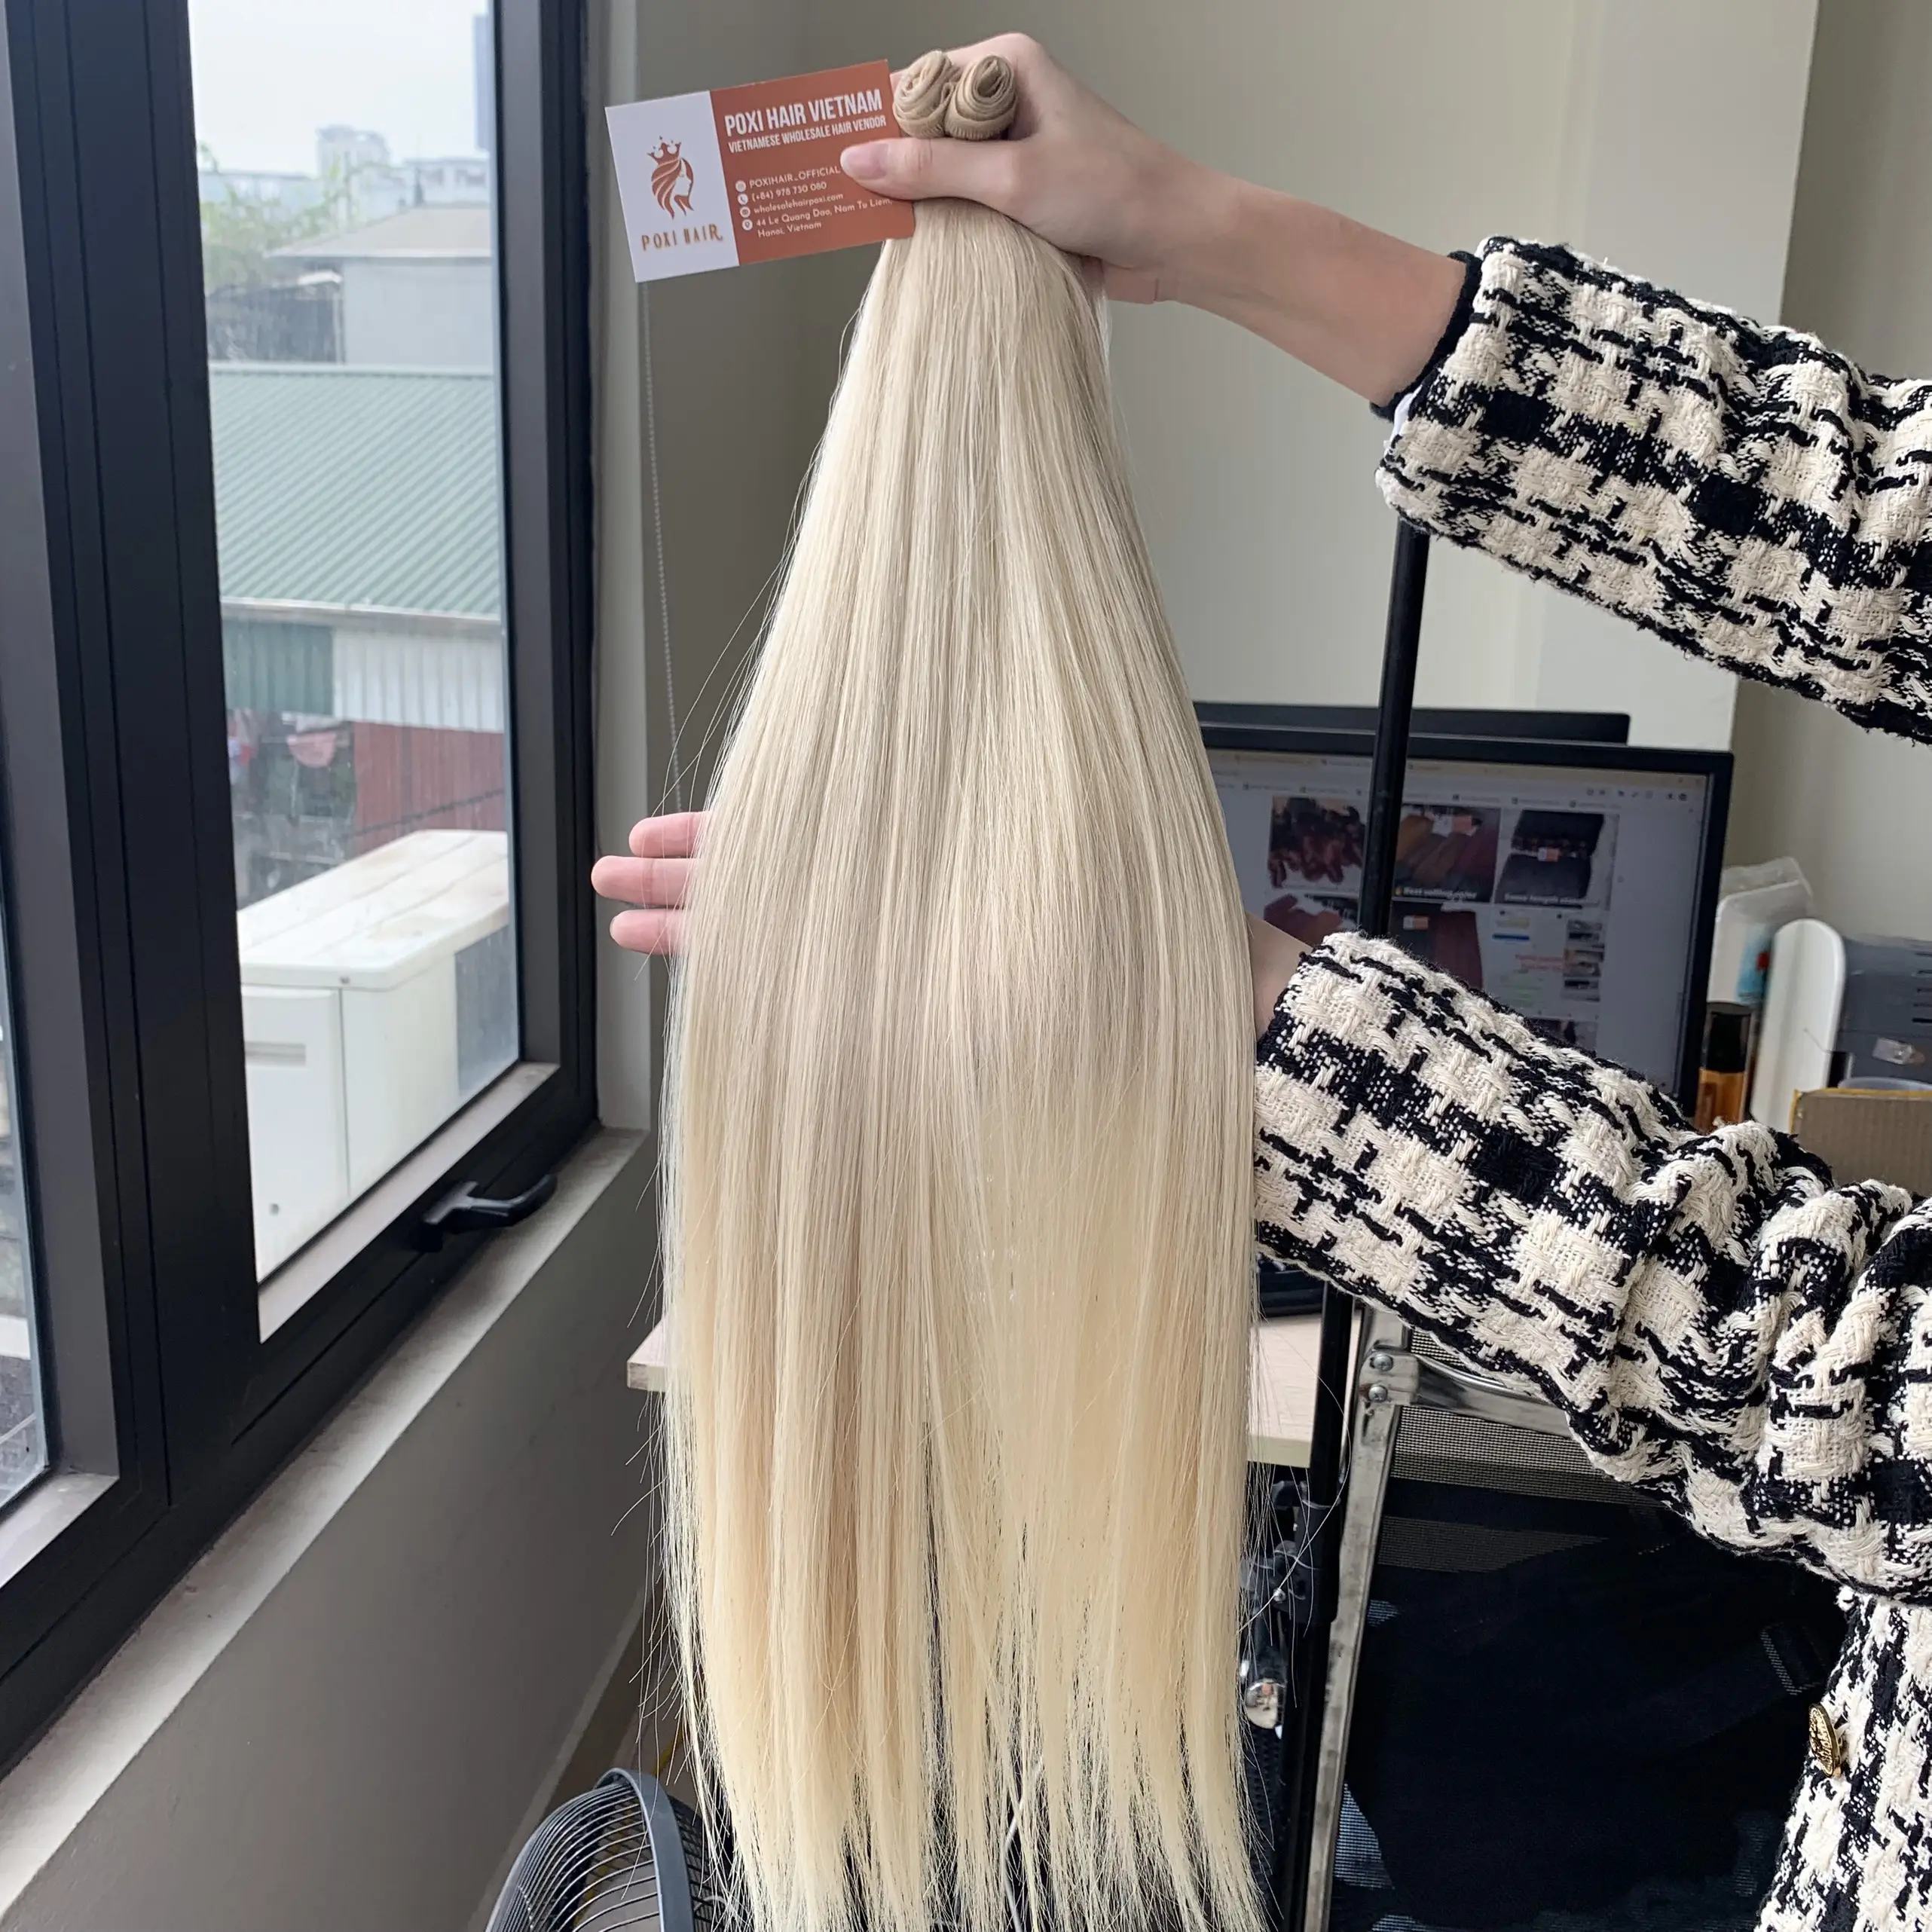 वियतनाम निर्माता से जीनियस वेट प्राकृतिक सीधे बाल एक्सटेंशन थोक बिक्री वर्जिन बाल सौंदर्य और व्यक्तिगत देखभाल